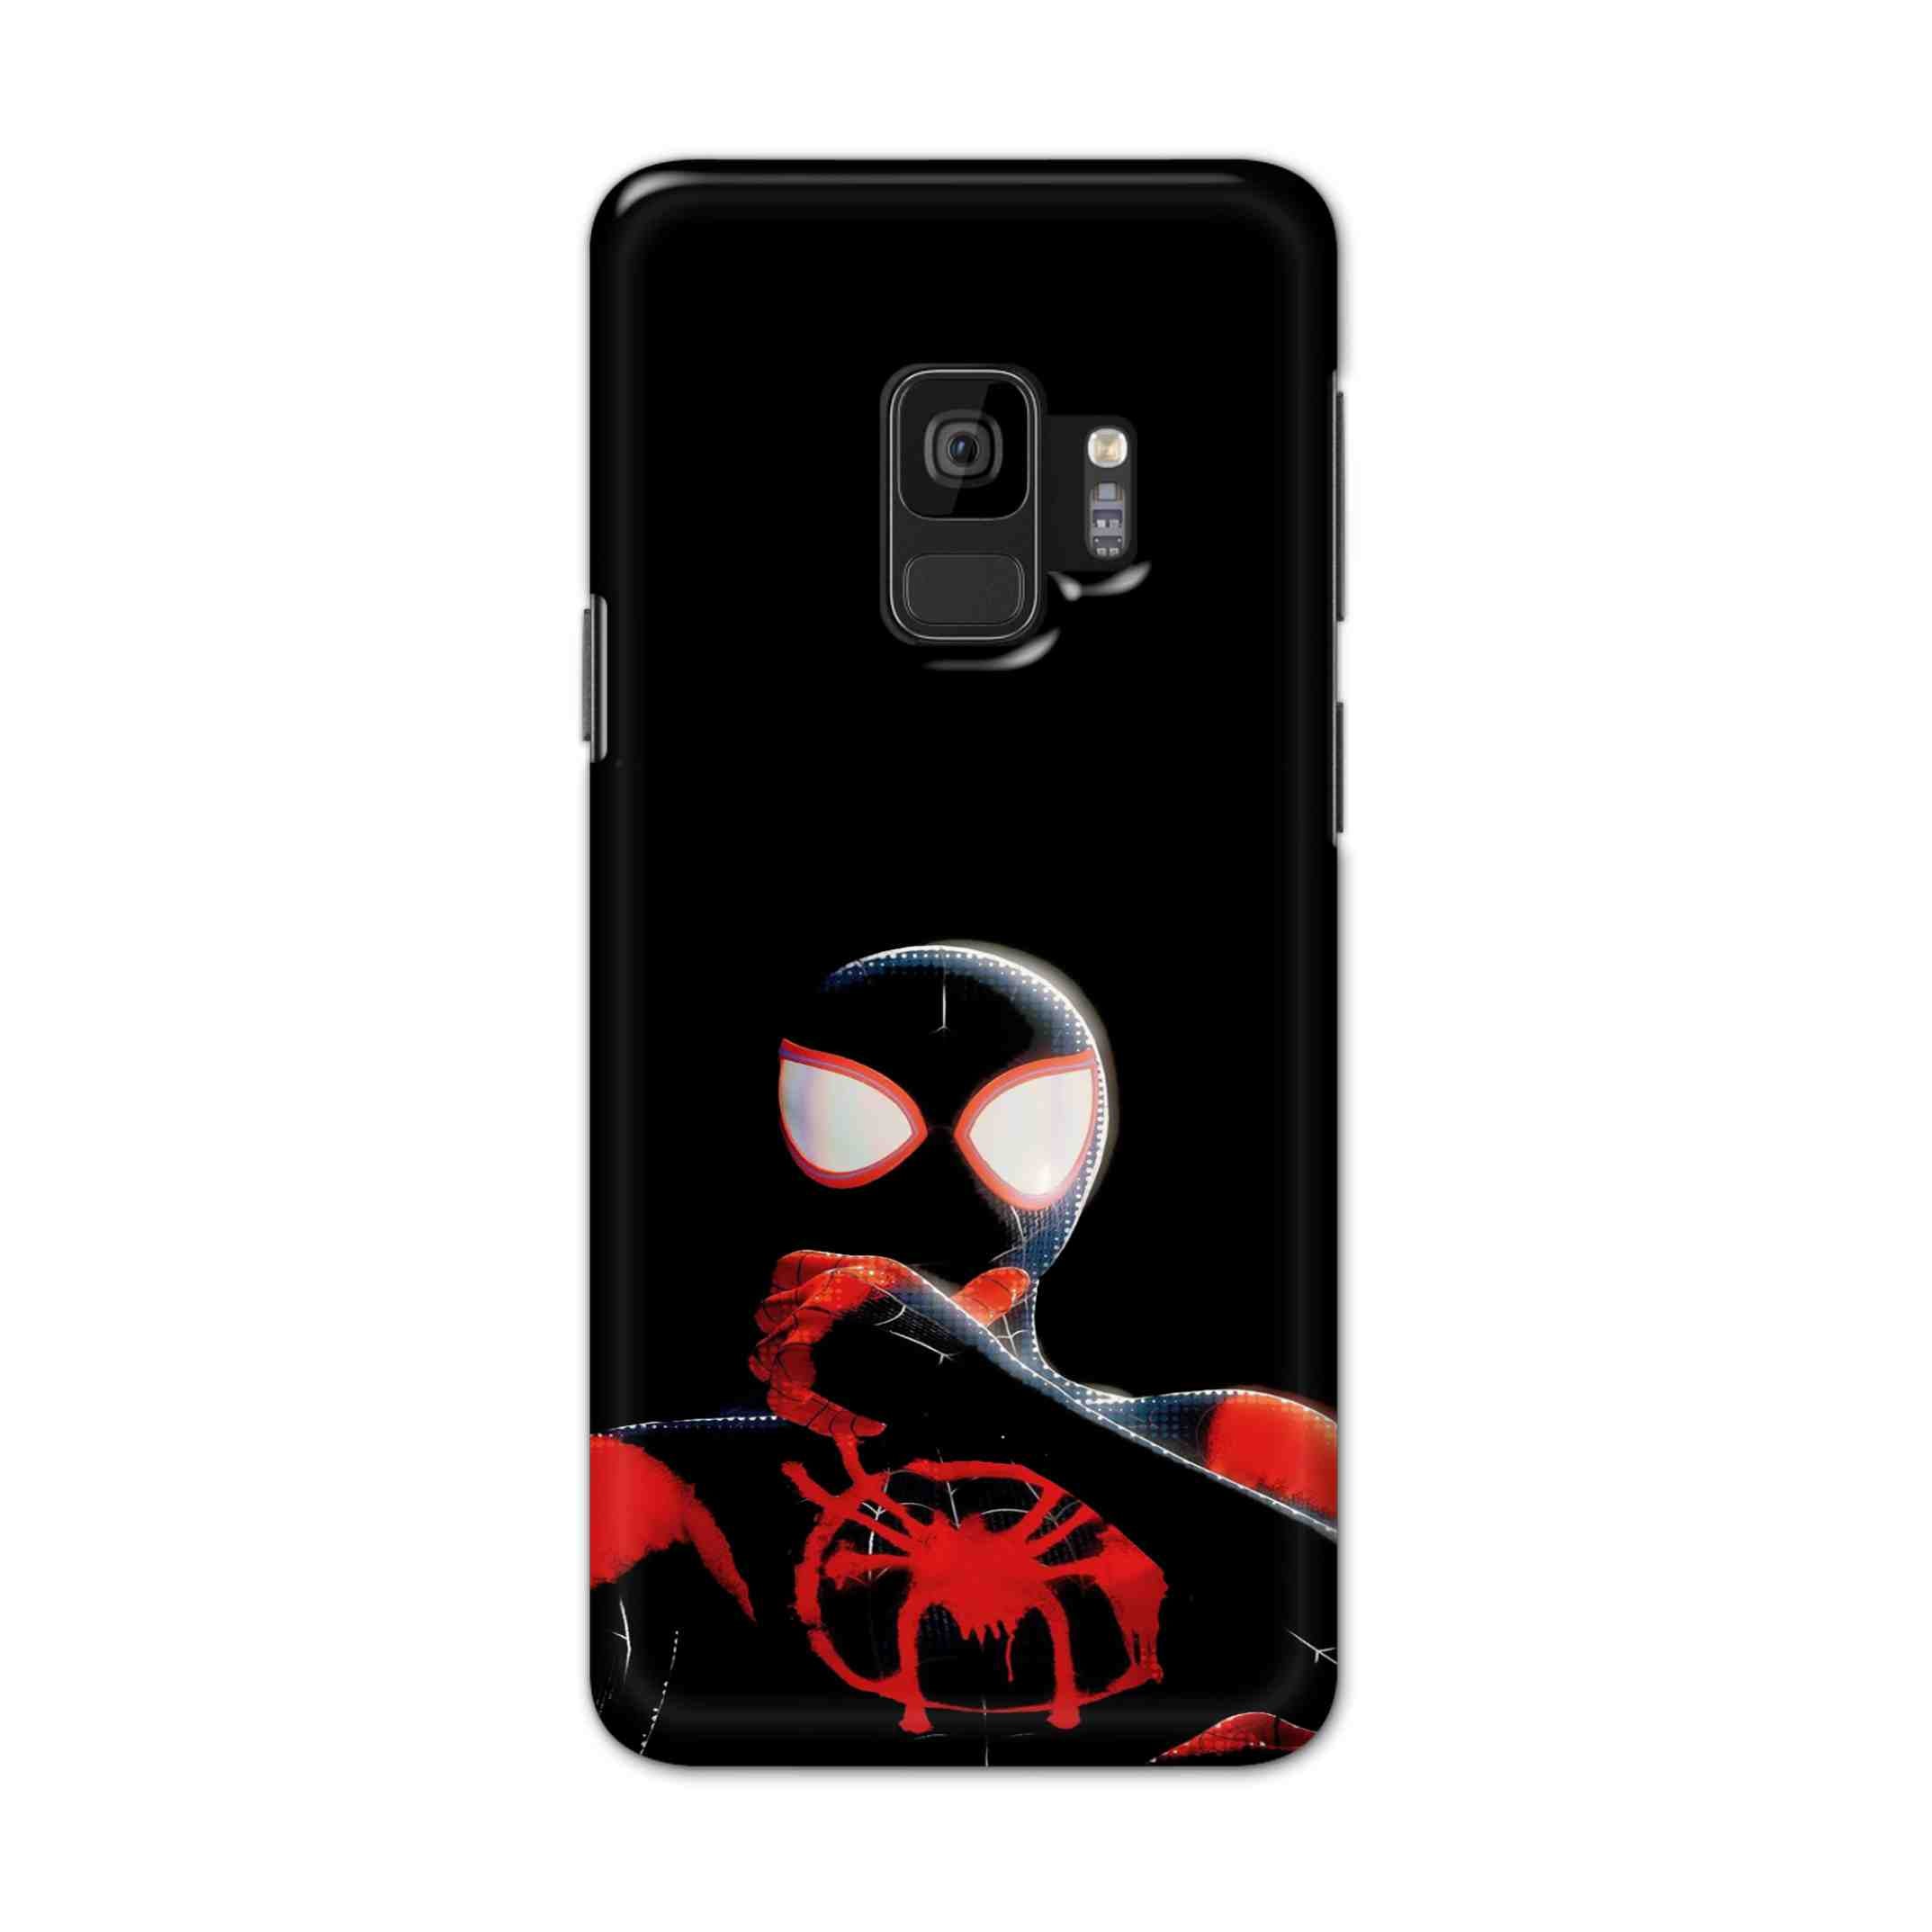 Buy Black Spiderman Hard Back Mobile Phone Case Cover For Samsung S9 Online